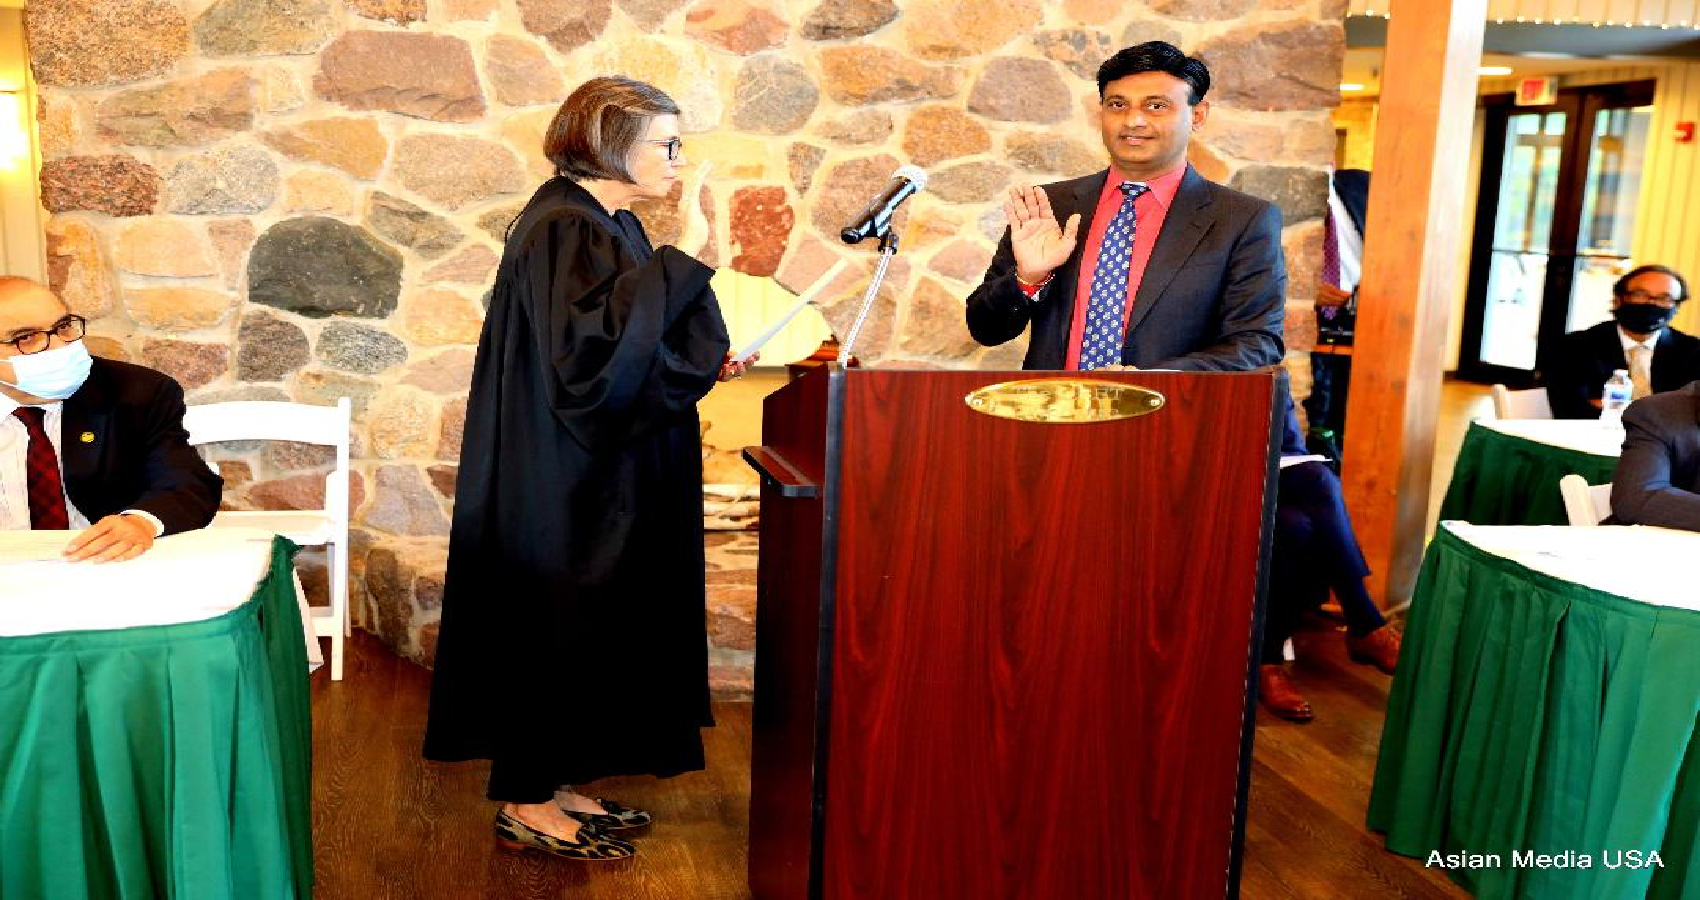 Dr. Suresh Reddy Officially Sworn In As Trustee Of Oak Brook, IL